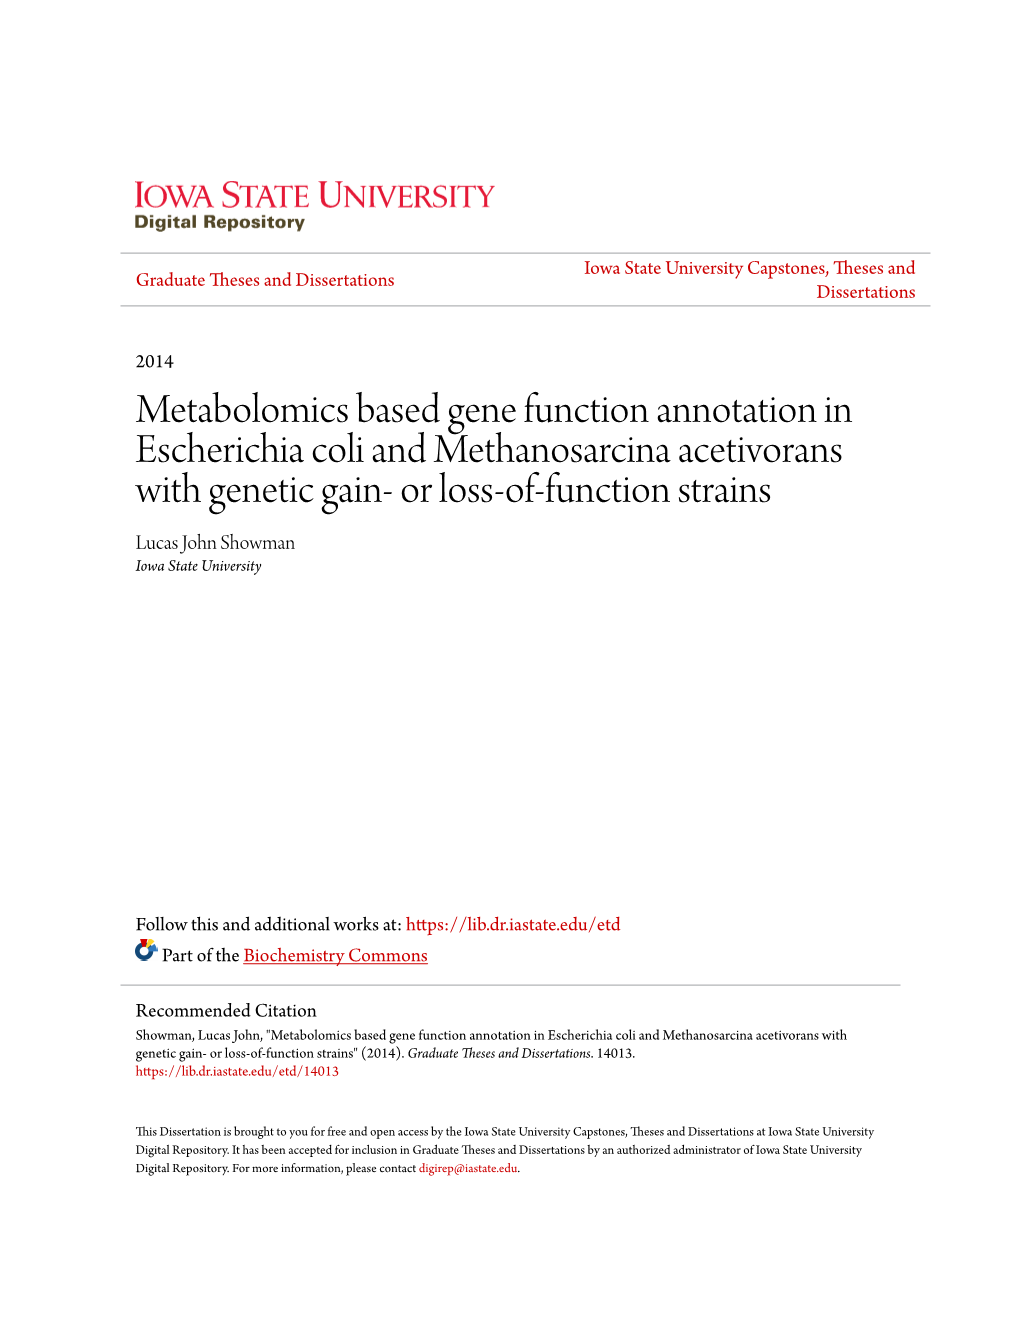 Metabolomics Based Gene Function Annotation in Escherichia Coli And